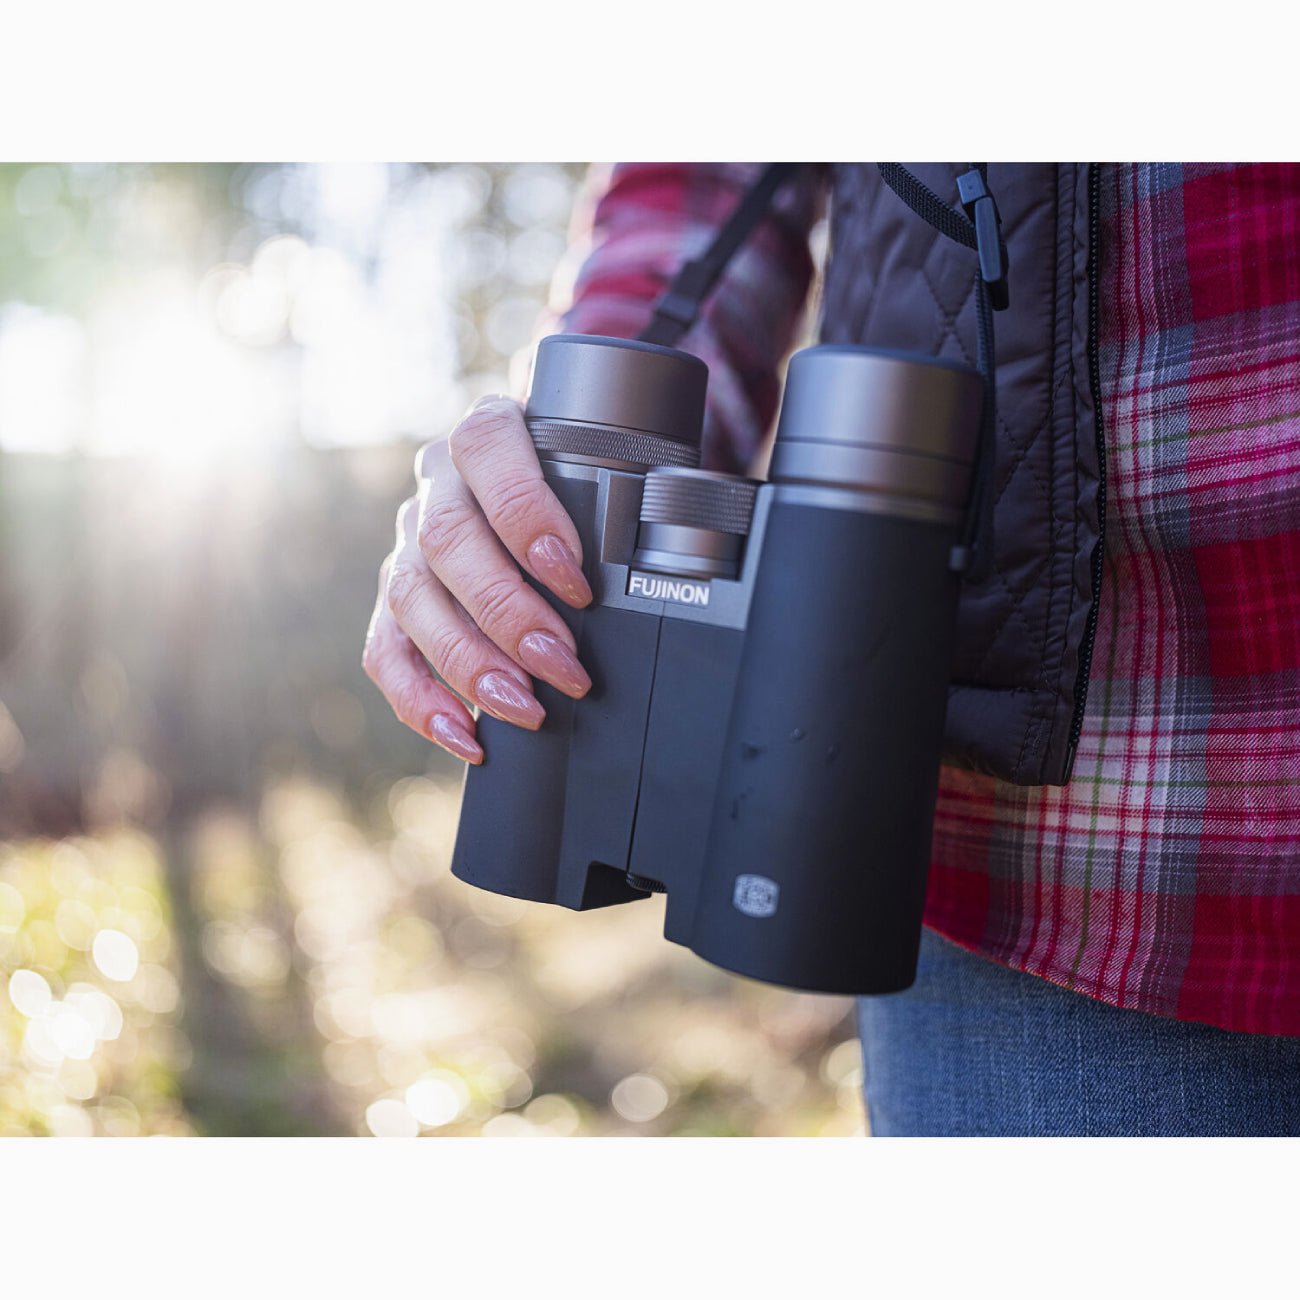 Fujinon 10x42 Hyper Clarity Binoculars / best magnification for binoculars, high magnification binoculars